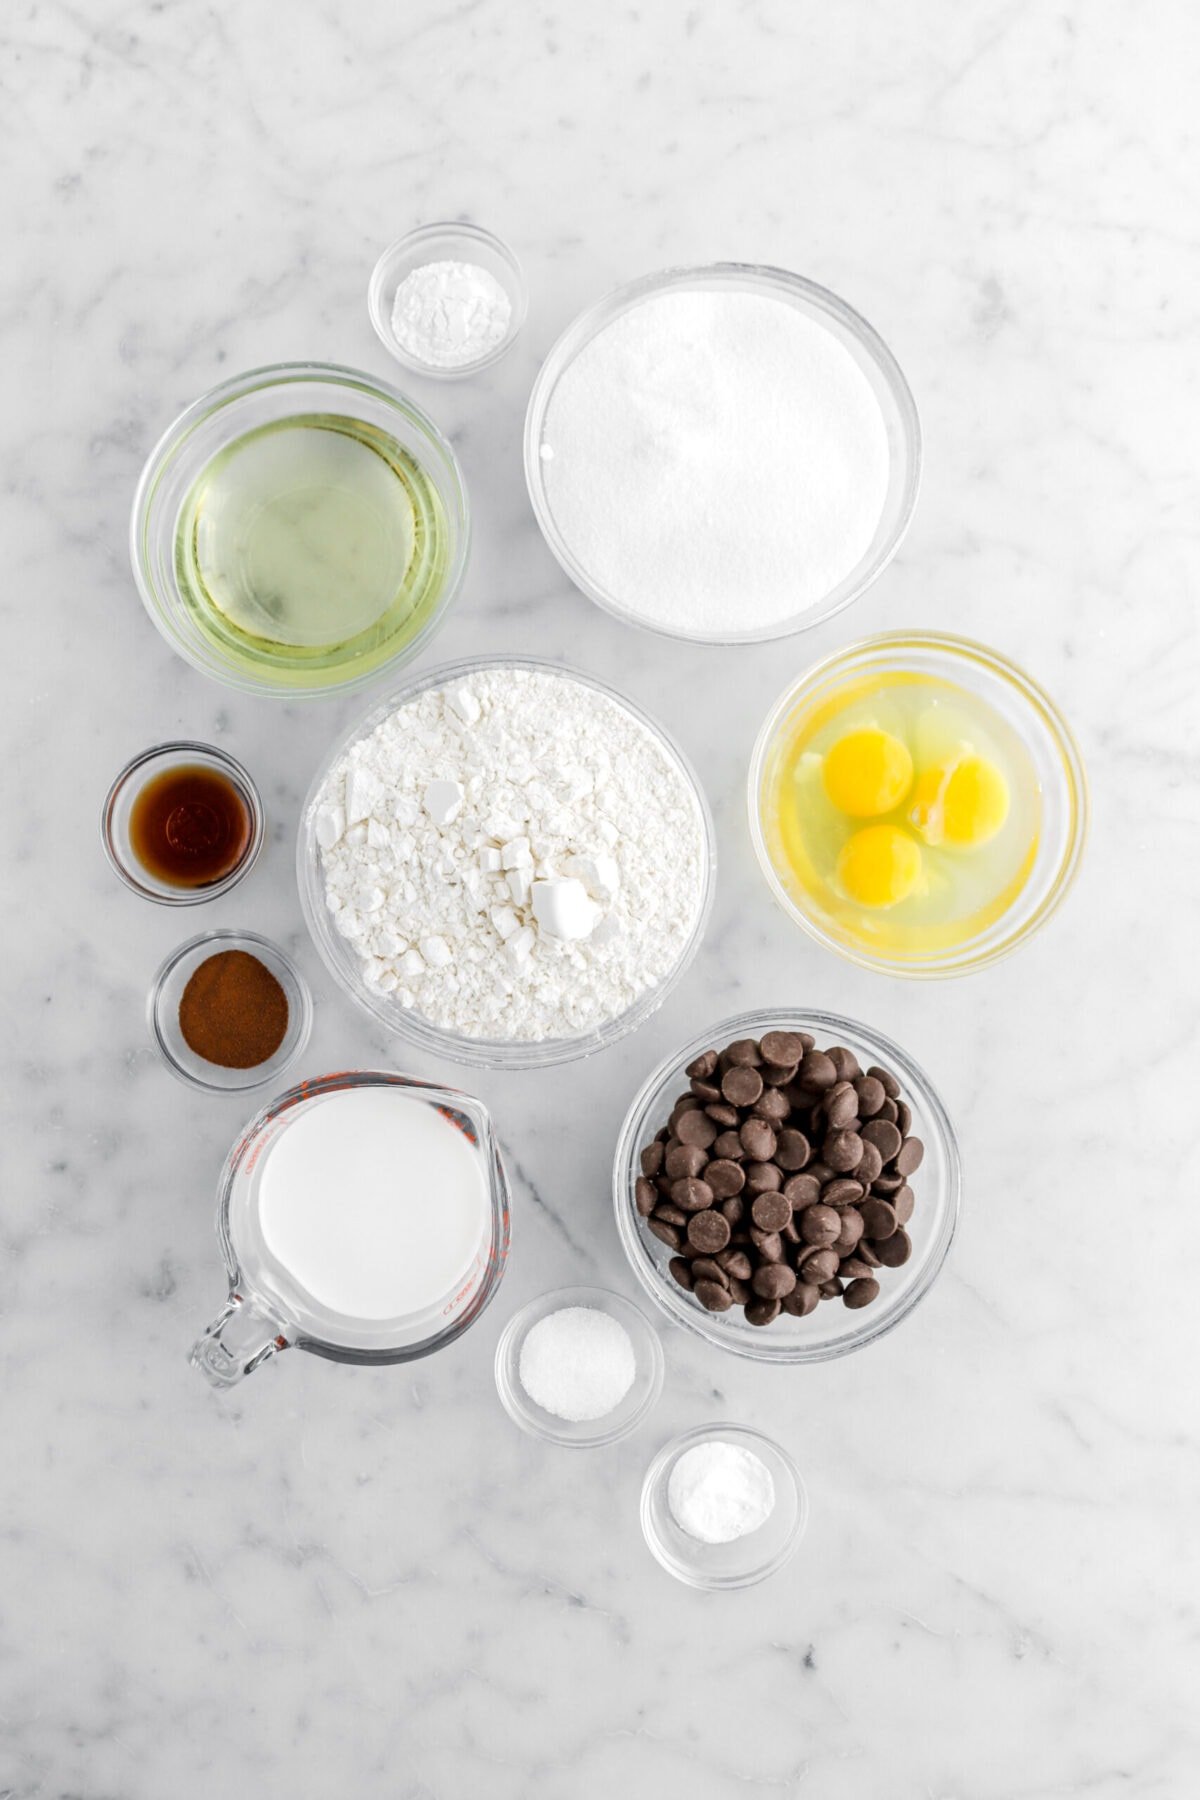 baking powder, sugar, vegetable oil, flour, vanilla, espresso powder, eggs, milk, chocolate chips, salt, and baking soda on marble surface.